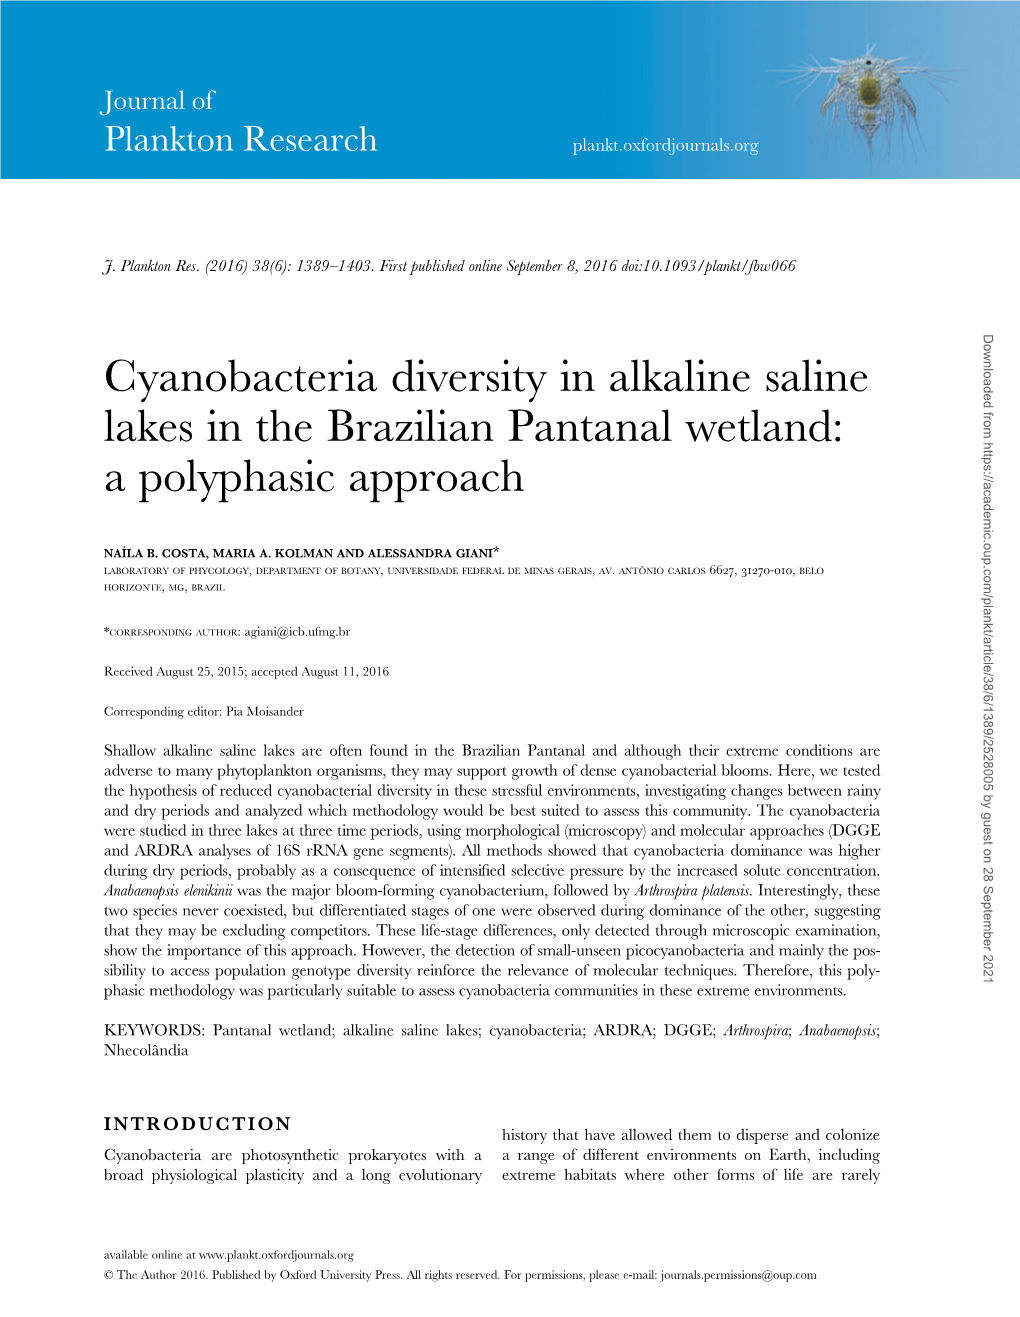 Cyanobacteria Diversity in Alkaline Saline Lakes in the Brazilian Pantanal Wetland: a Polyphasic Approach